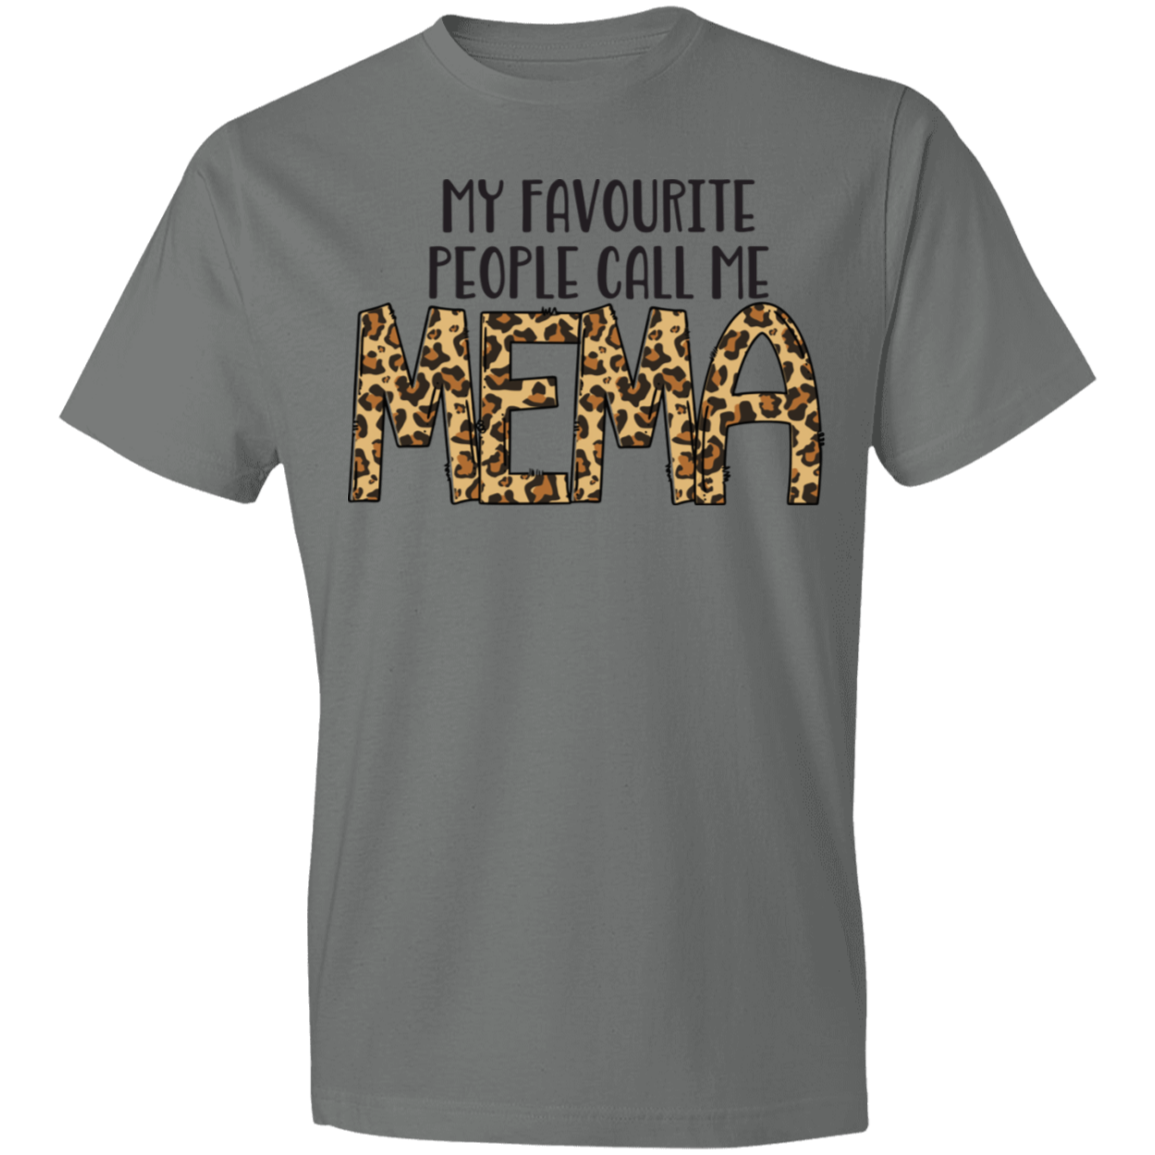 My Favorite People Call Me “Grandma” – MezaCraftRoom